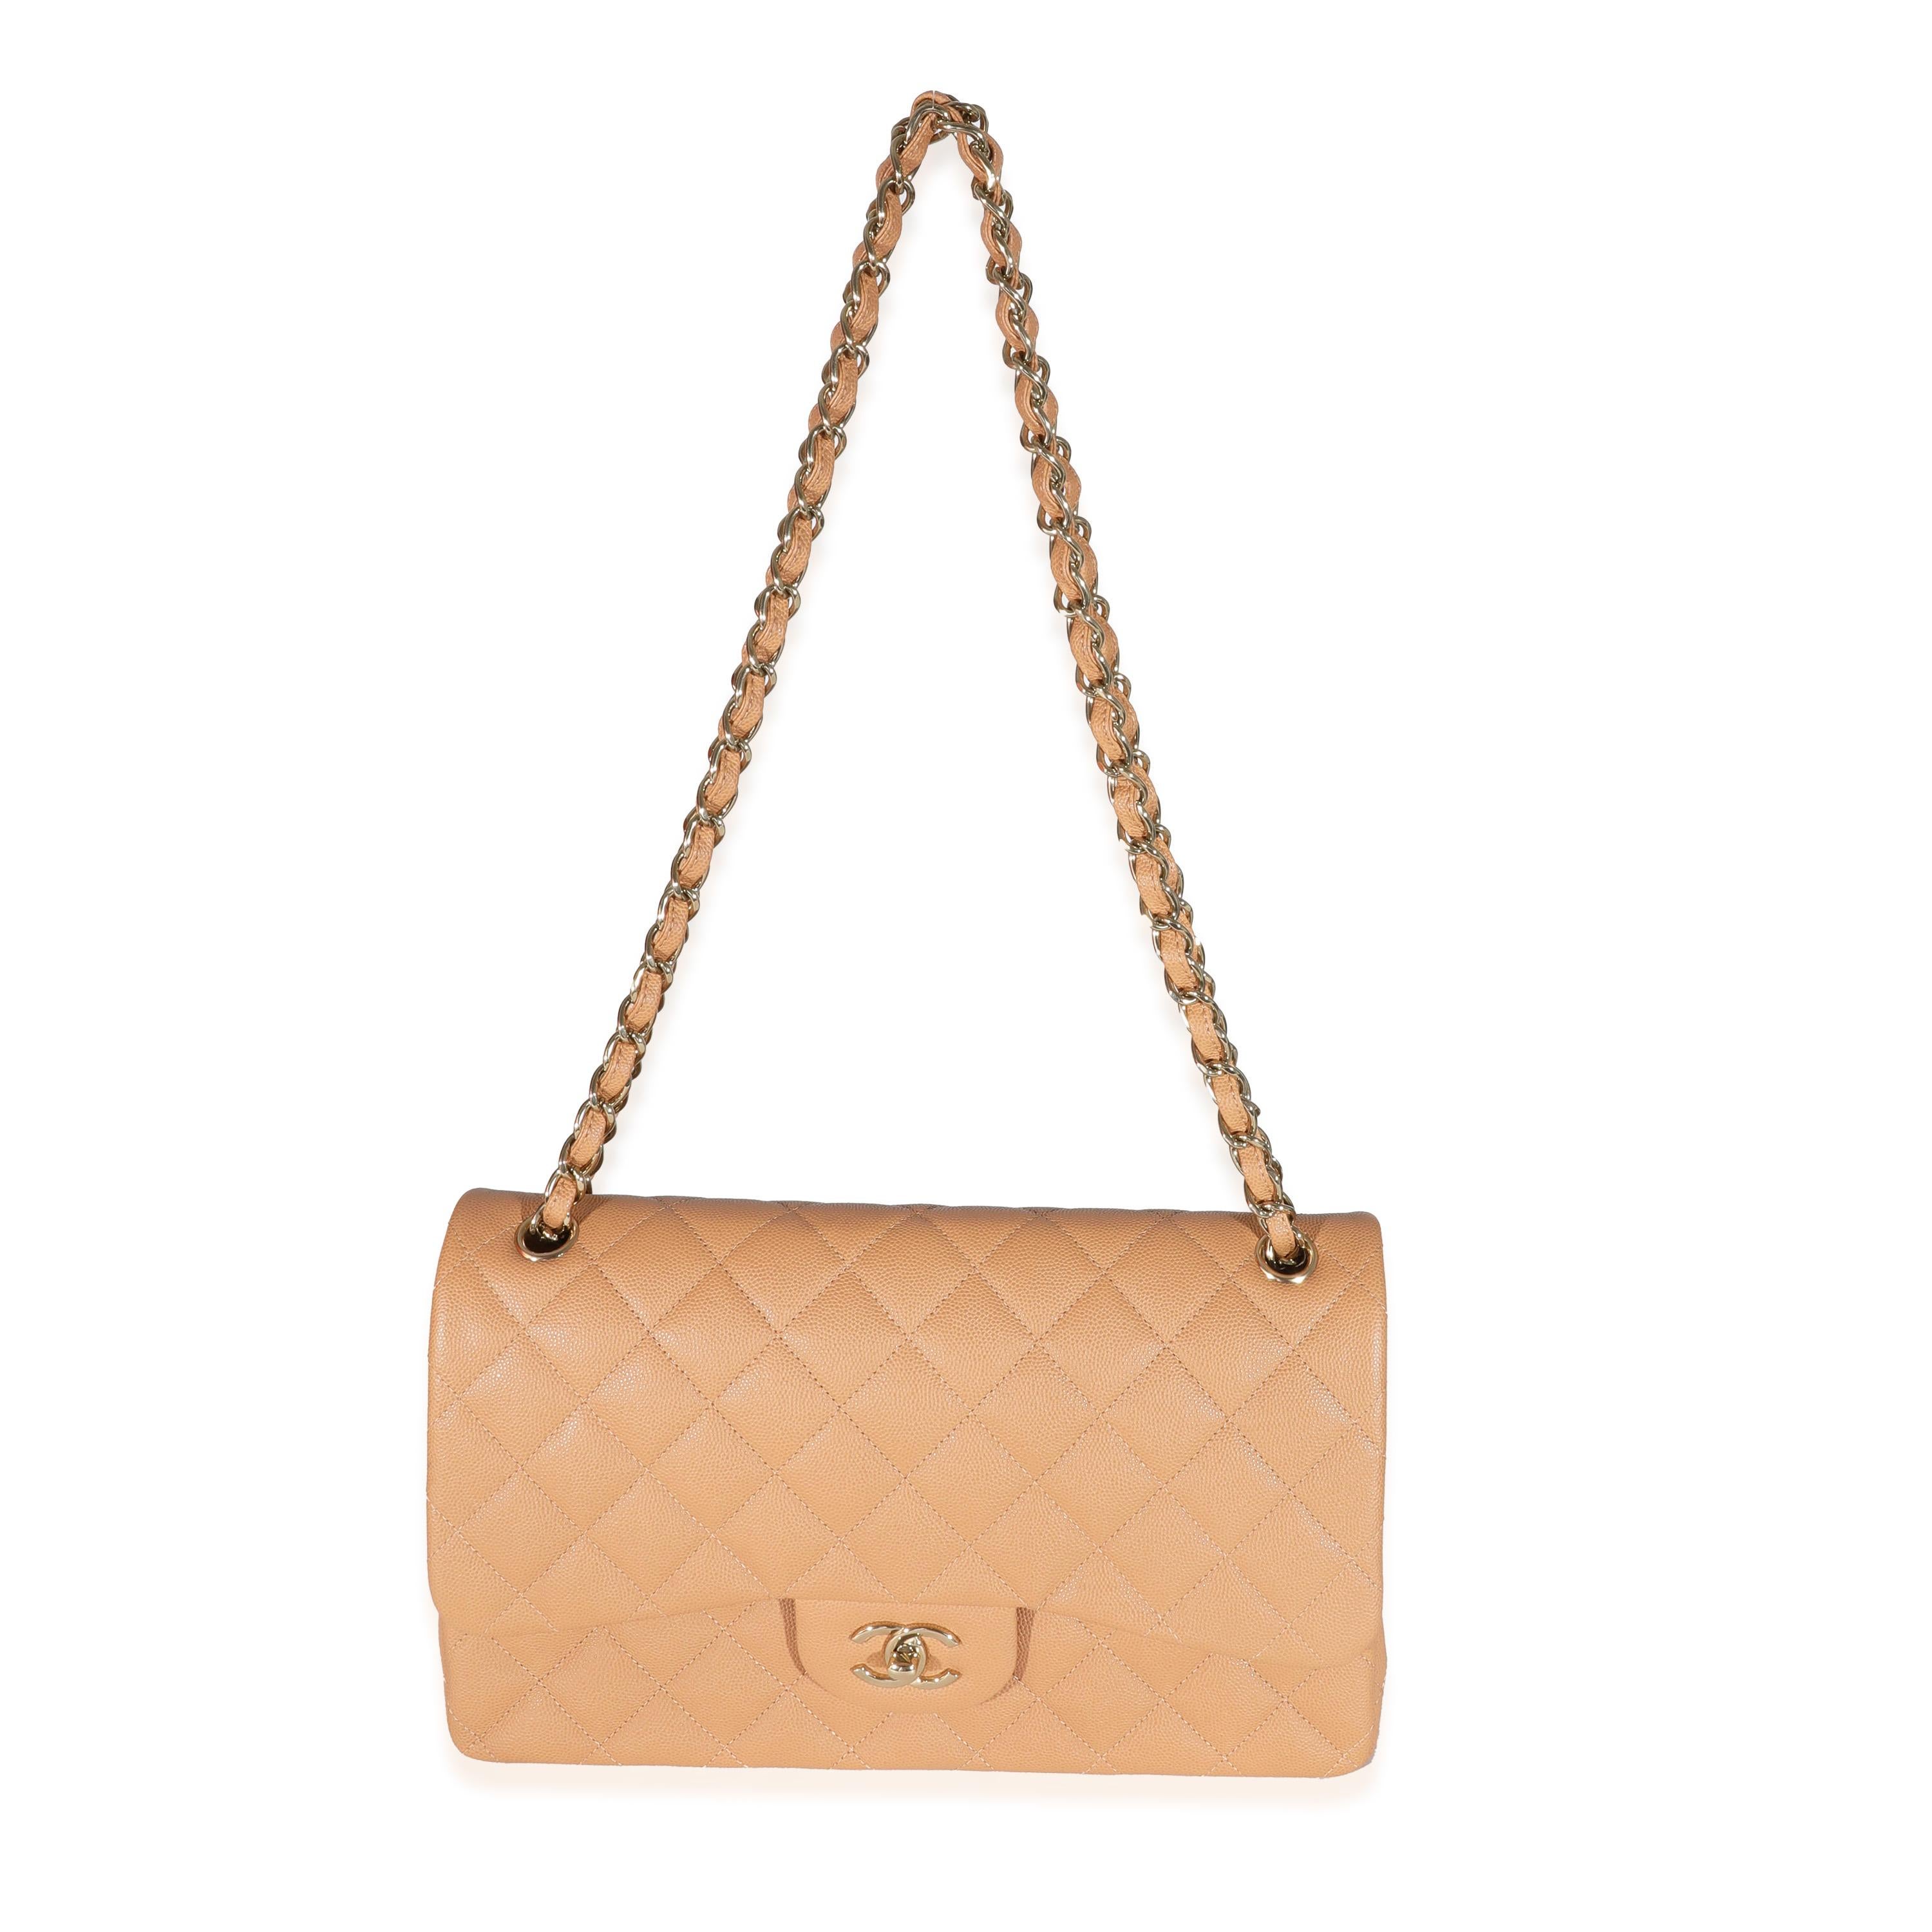 Chanel Flap Bag Caramel - 10 For Sale on 1stDibs  caramel chanel bag,  chanel 22s caramel, chanel caramel classic flap